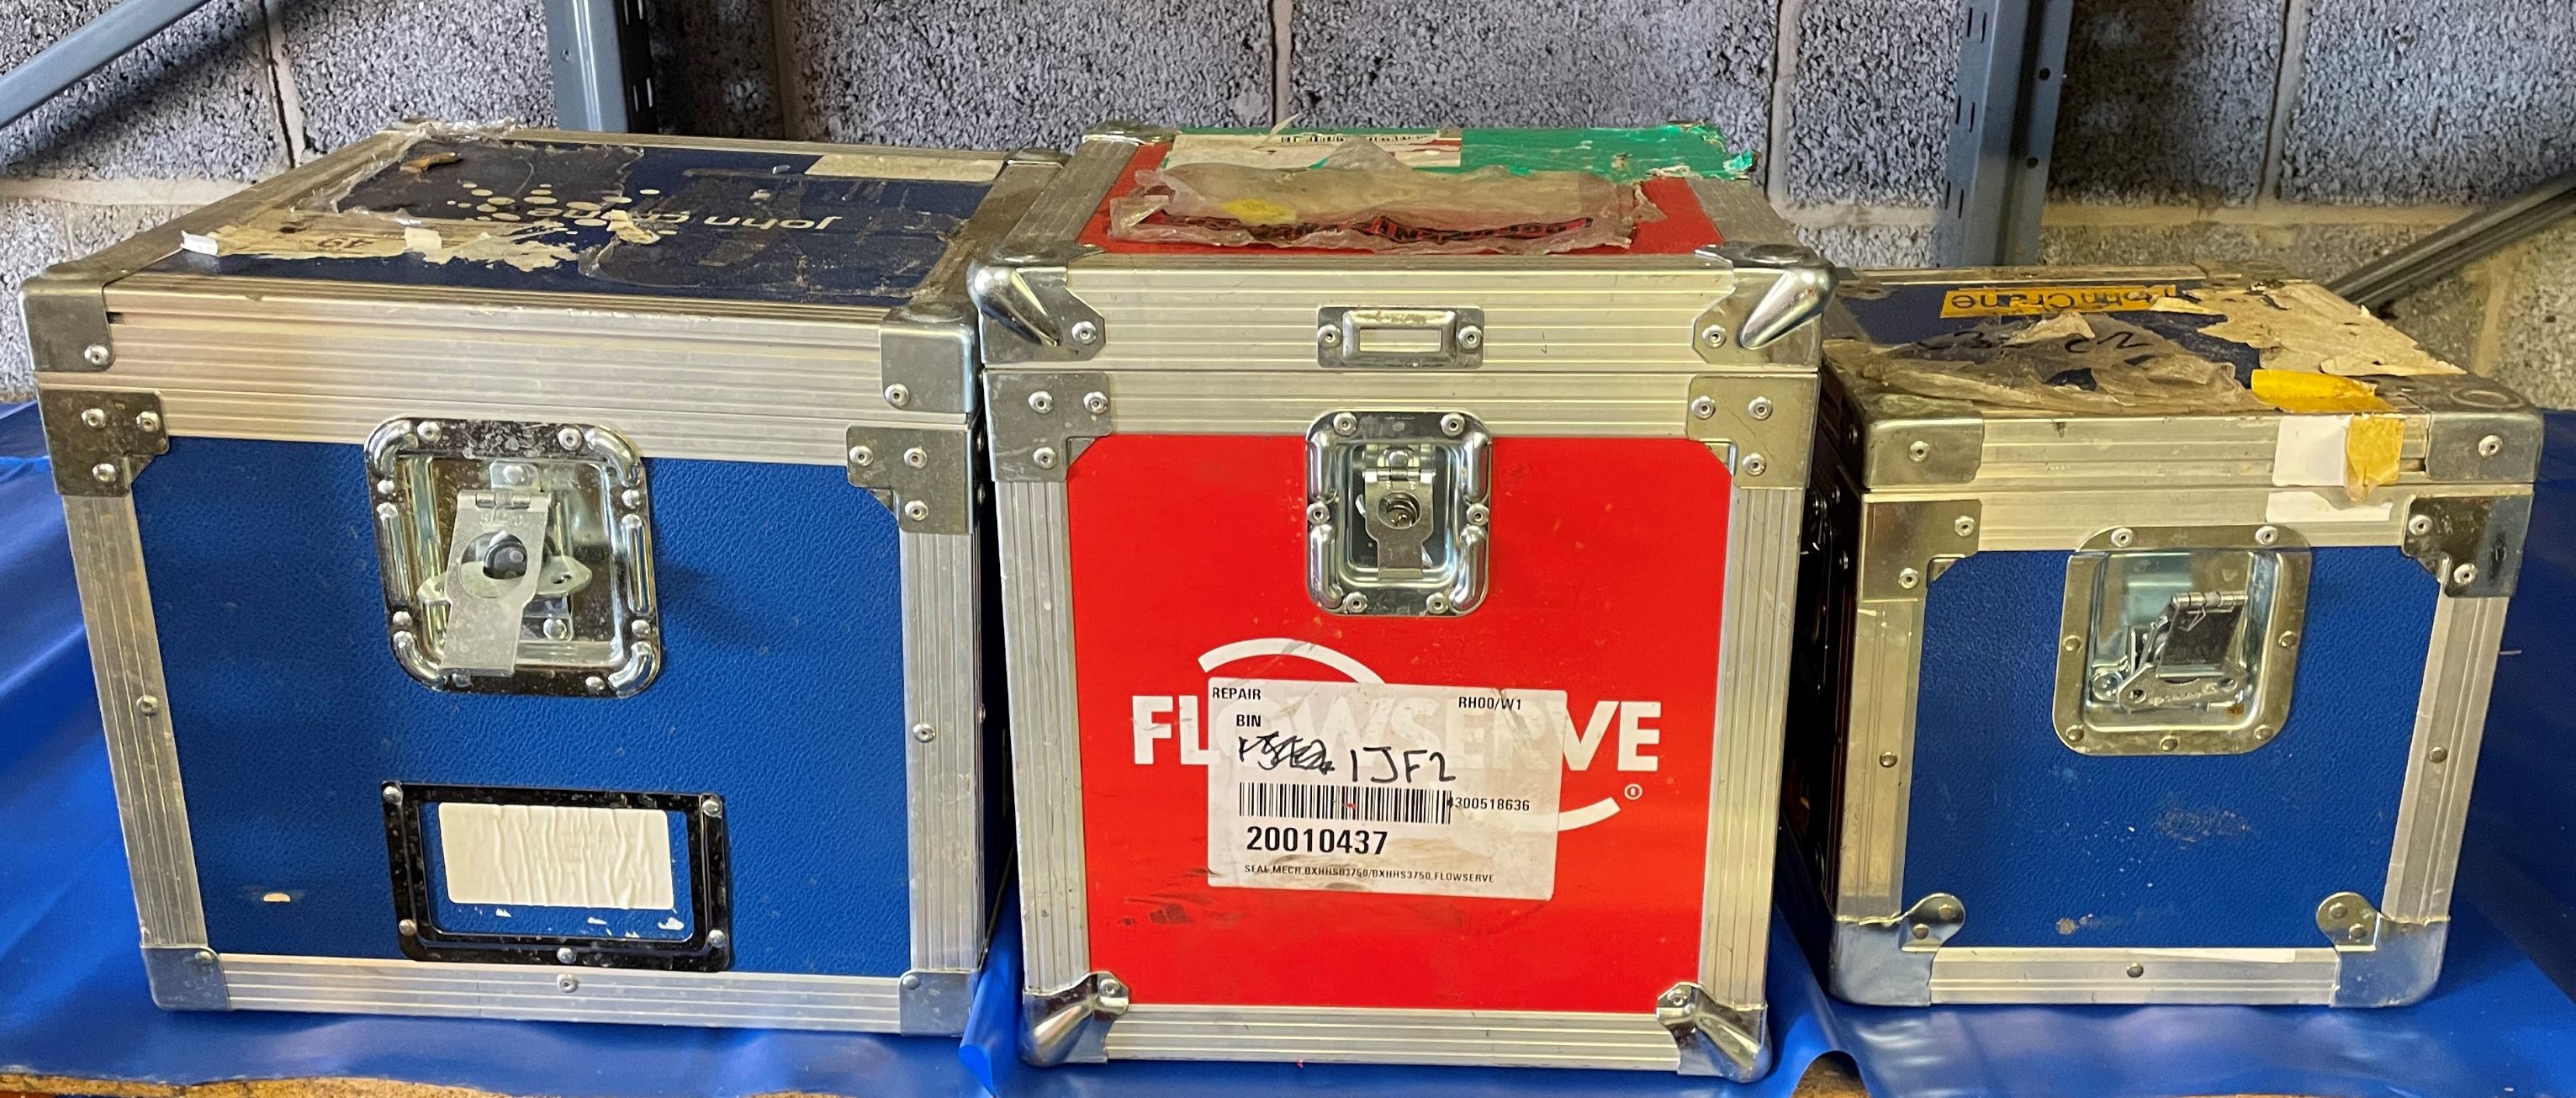 3 flight boxes